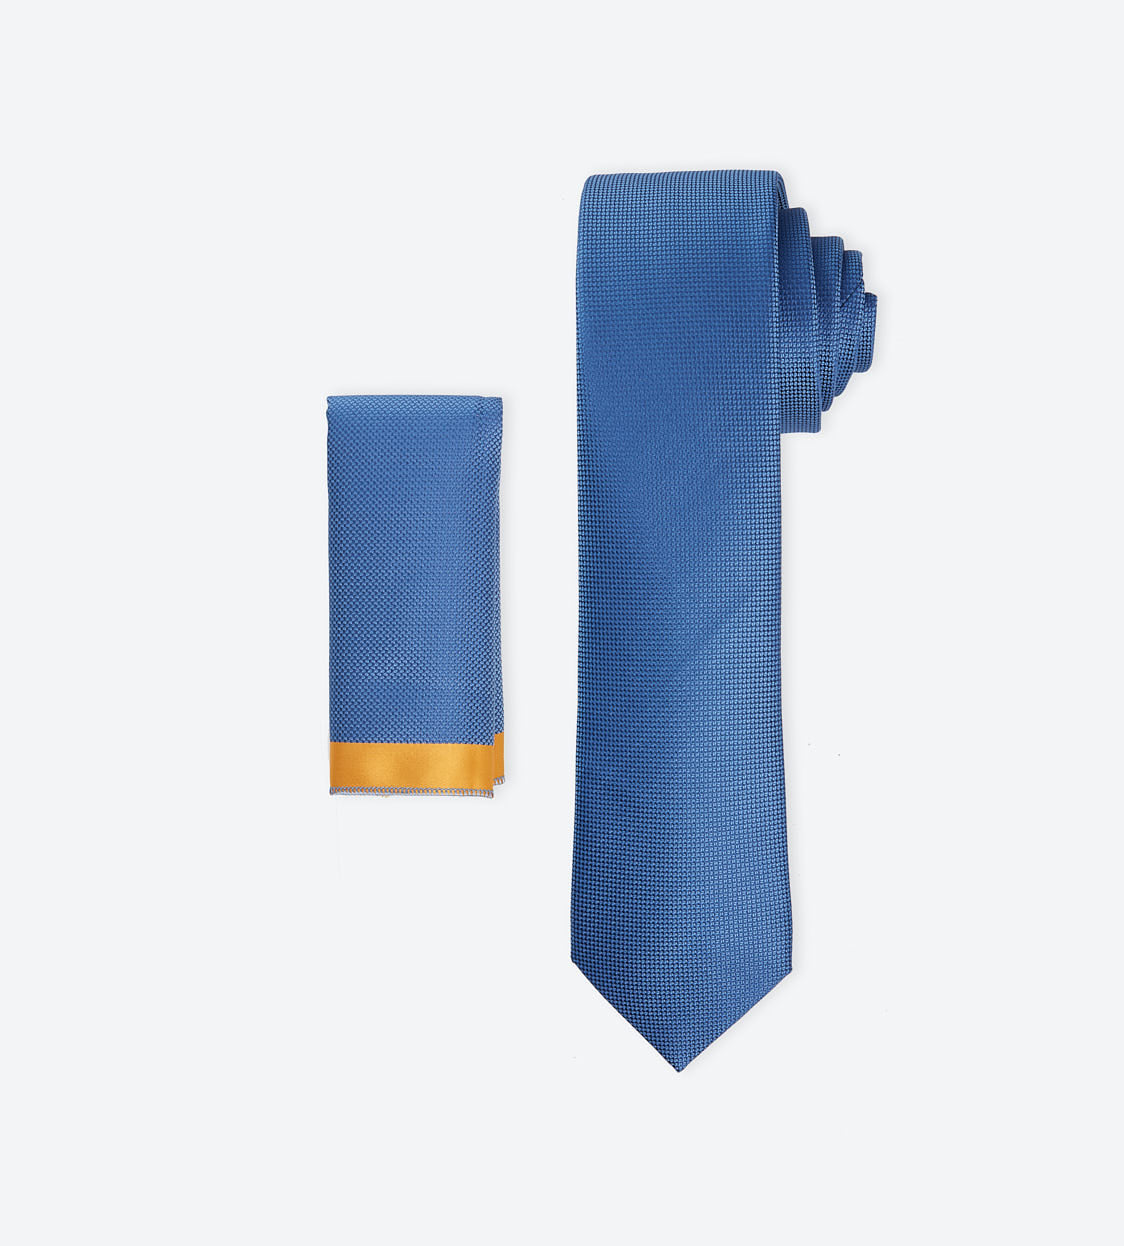 Blue Weave Tie. Bright color